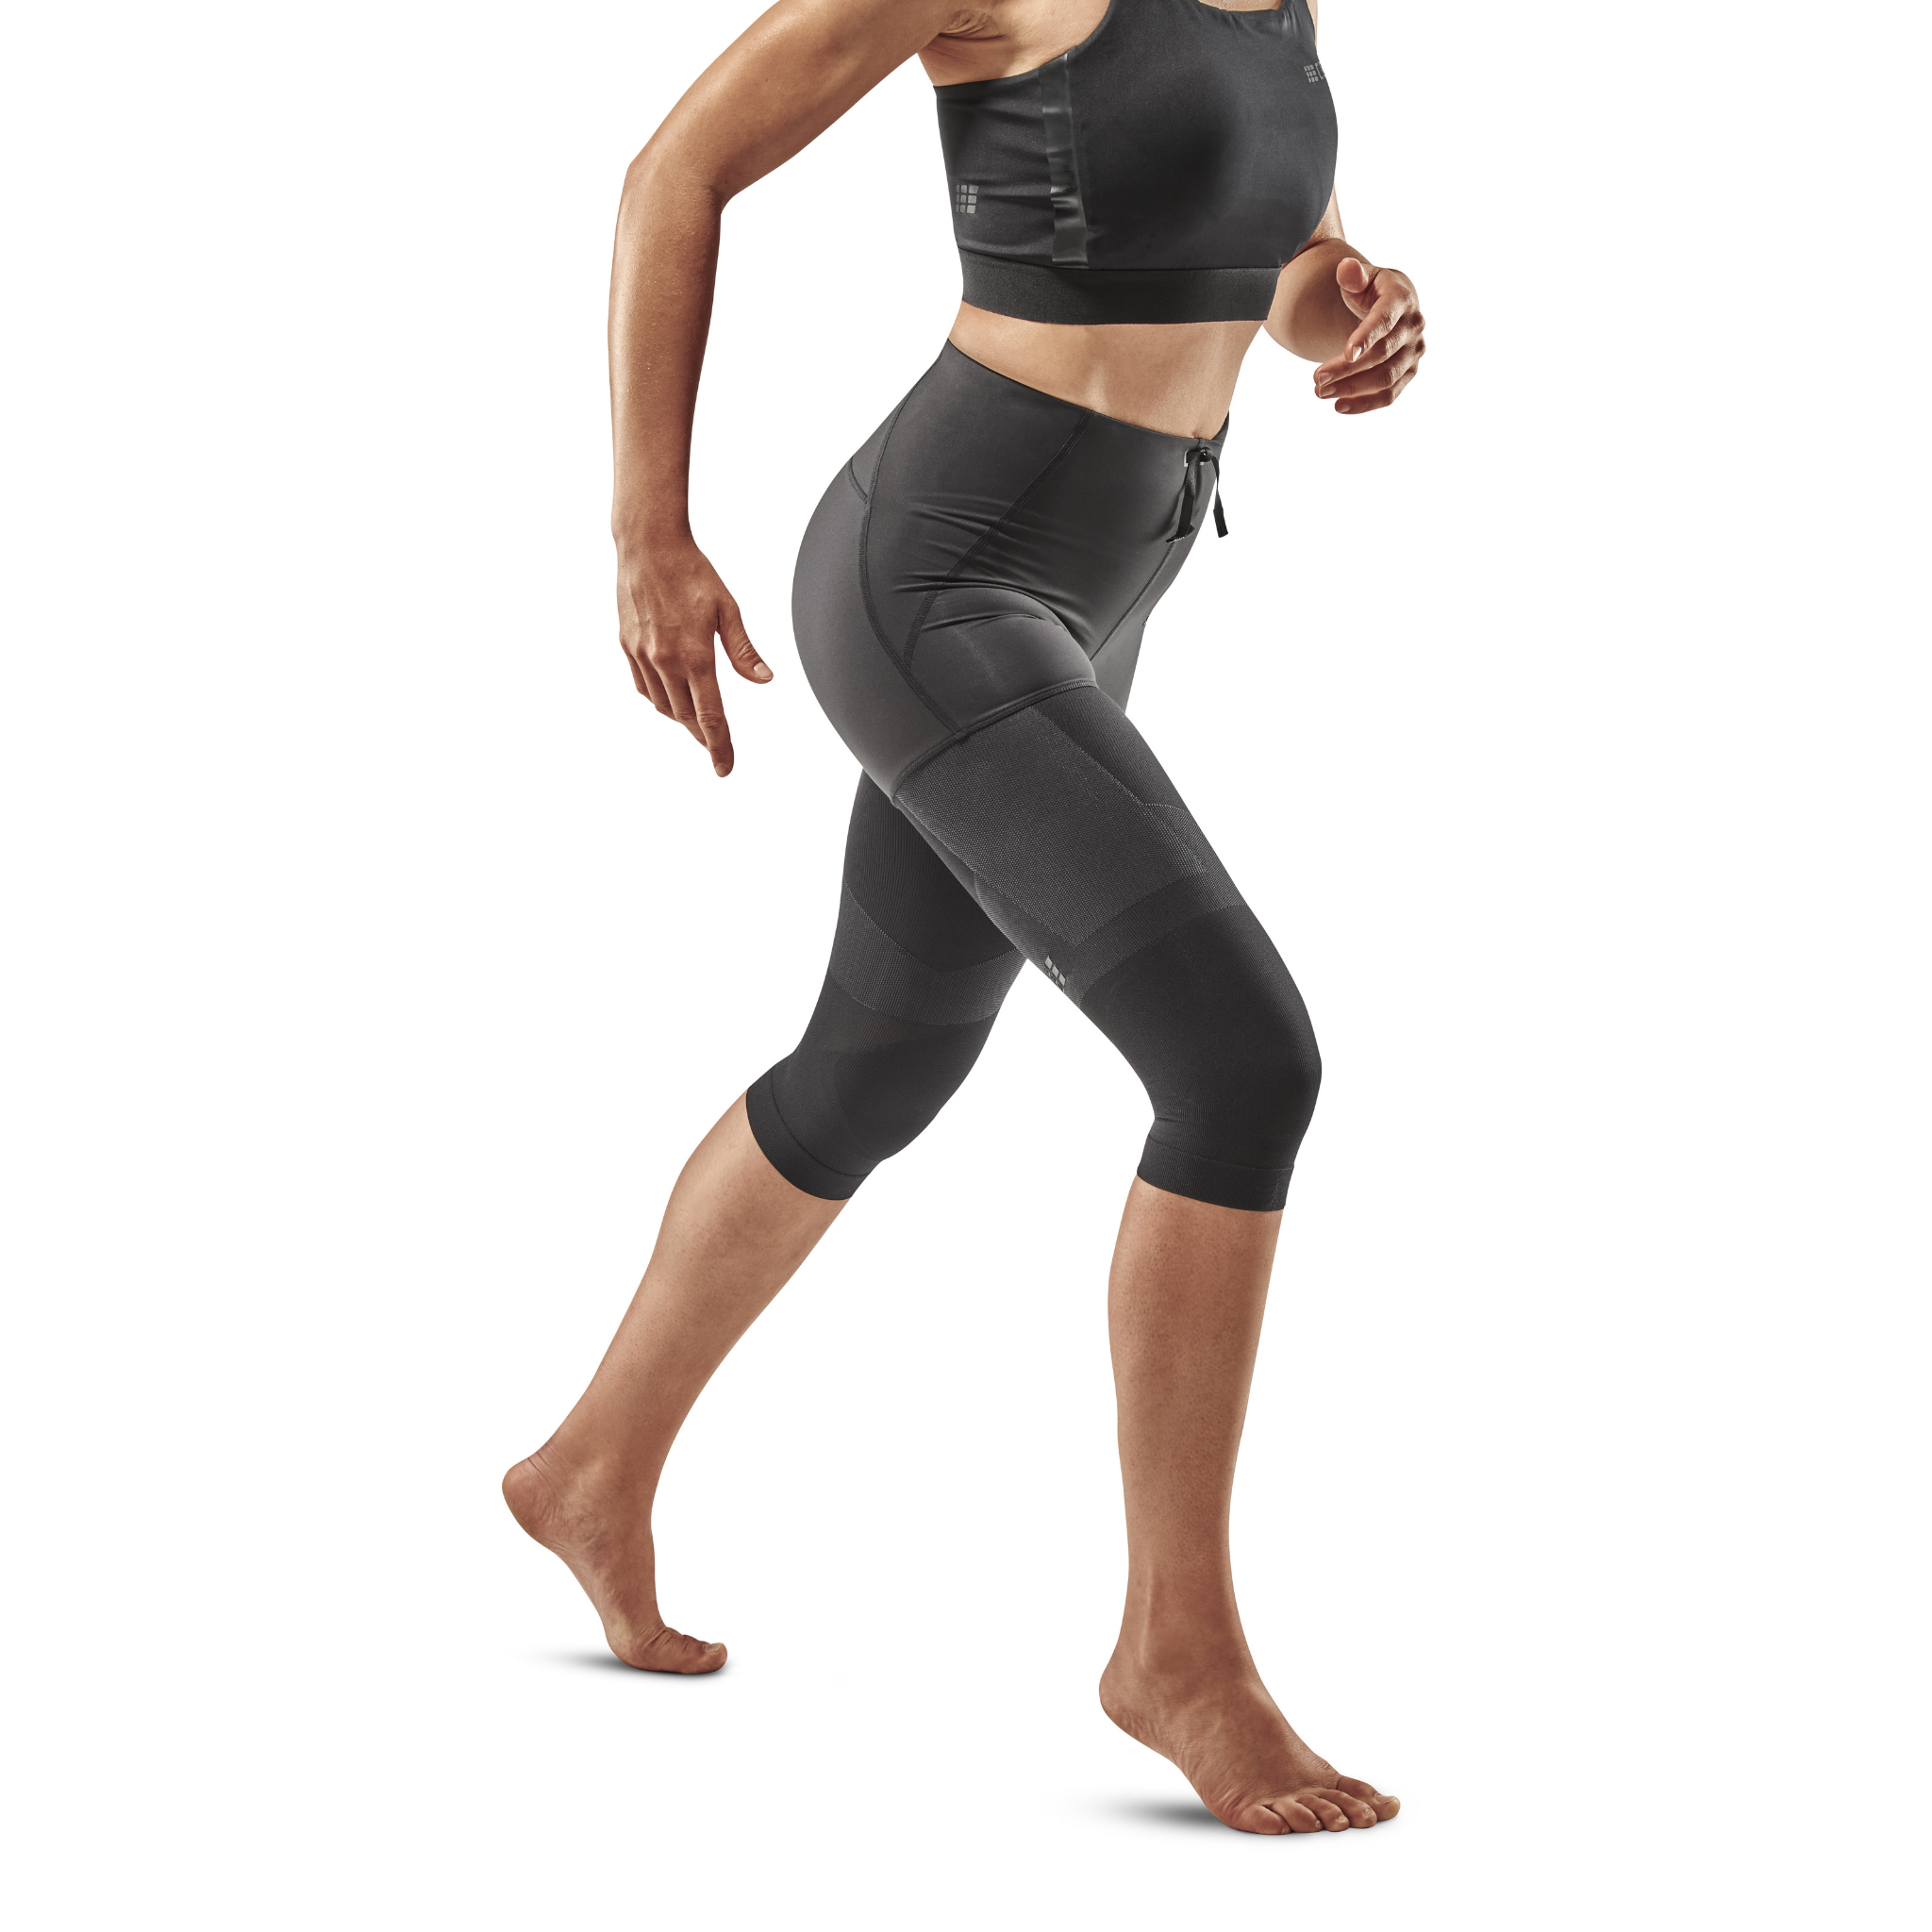 Breathable & Anti-Bacterial leggings pantyhose sport 